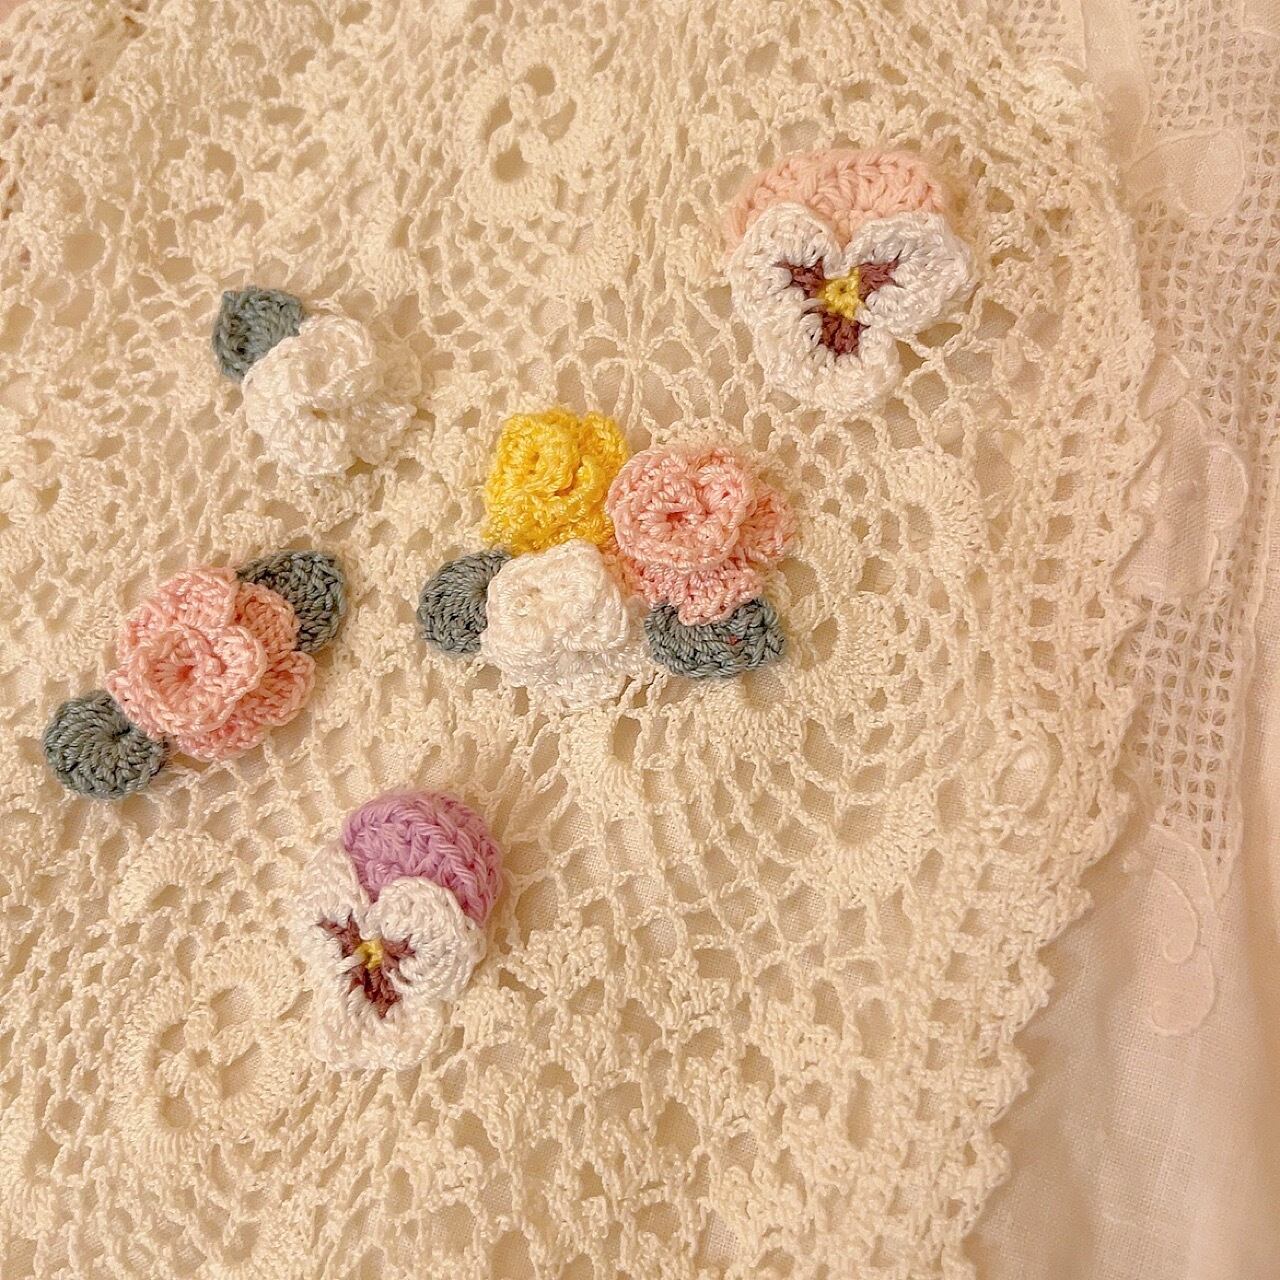 remake : flower fall crochet knit cardigan